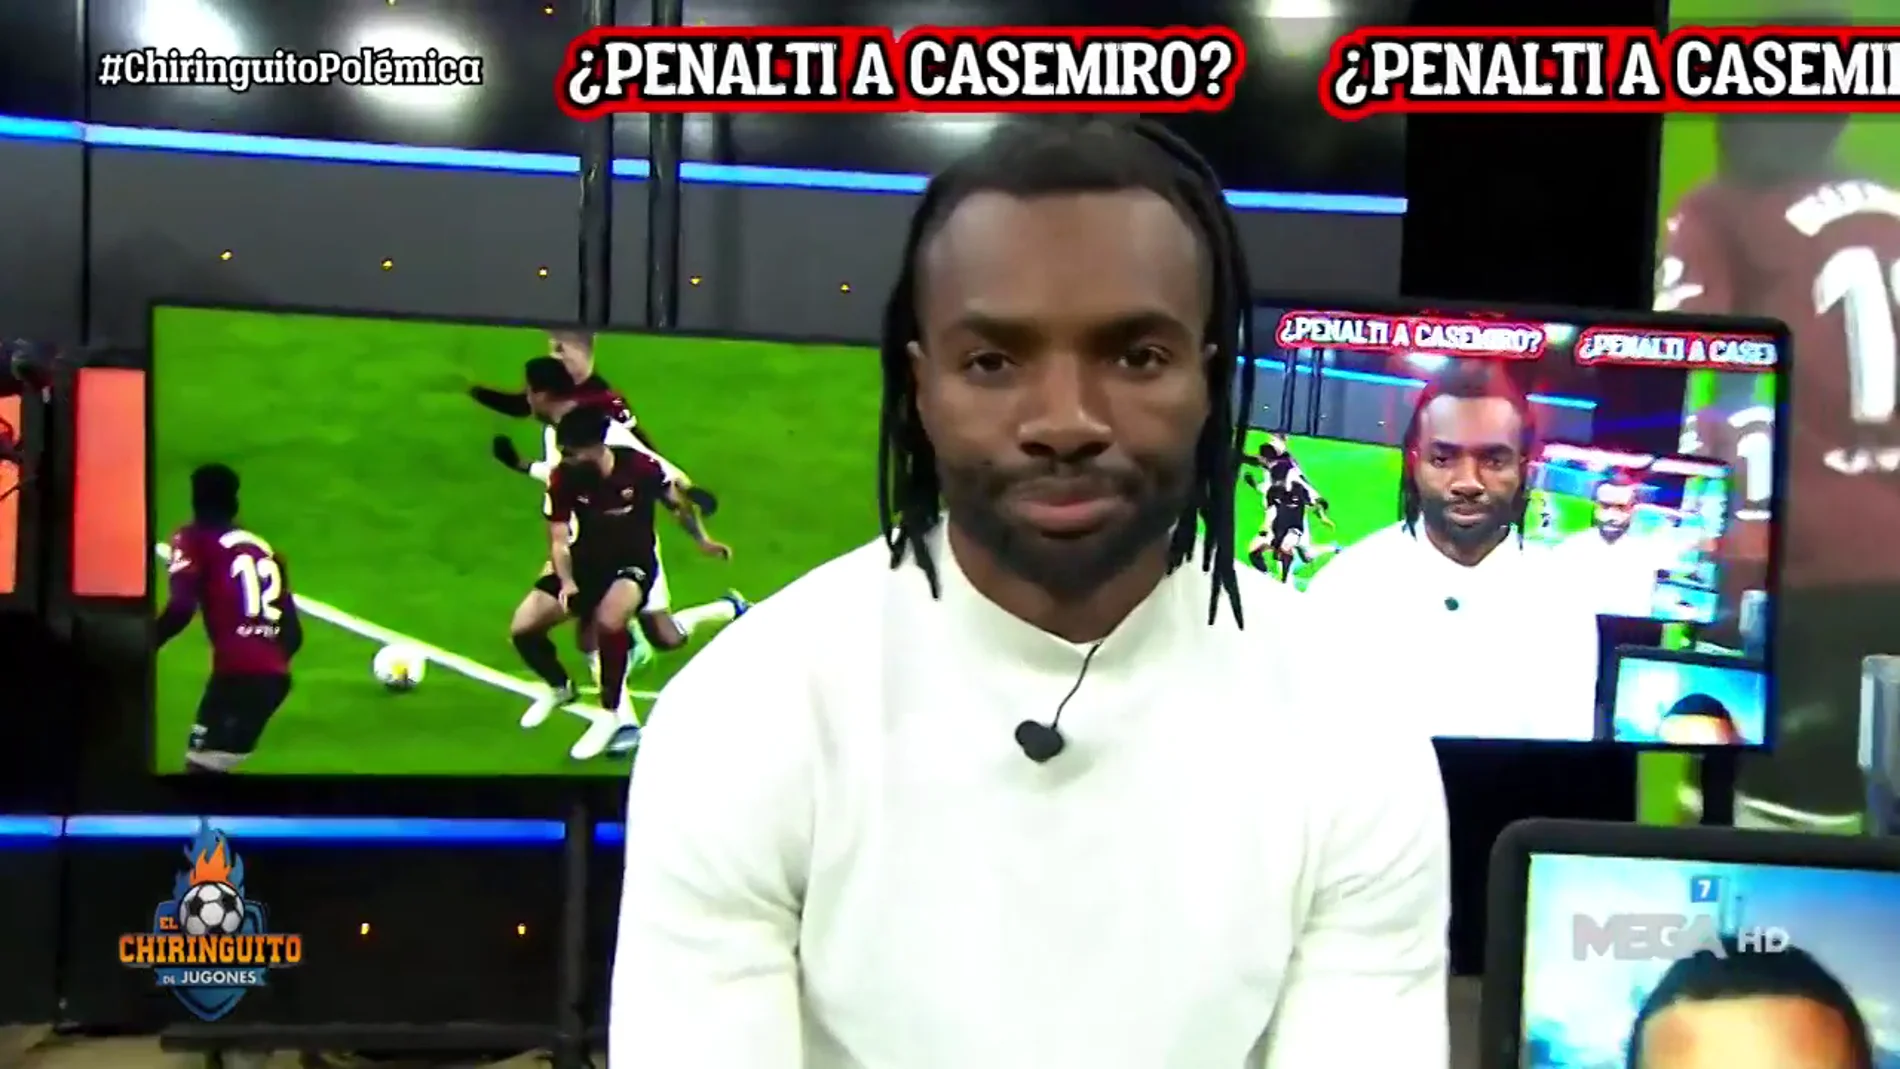 ¿Es penalti de Alderete a Casemiro? 